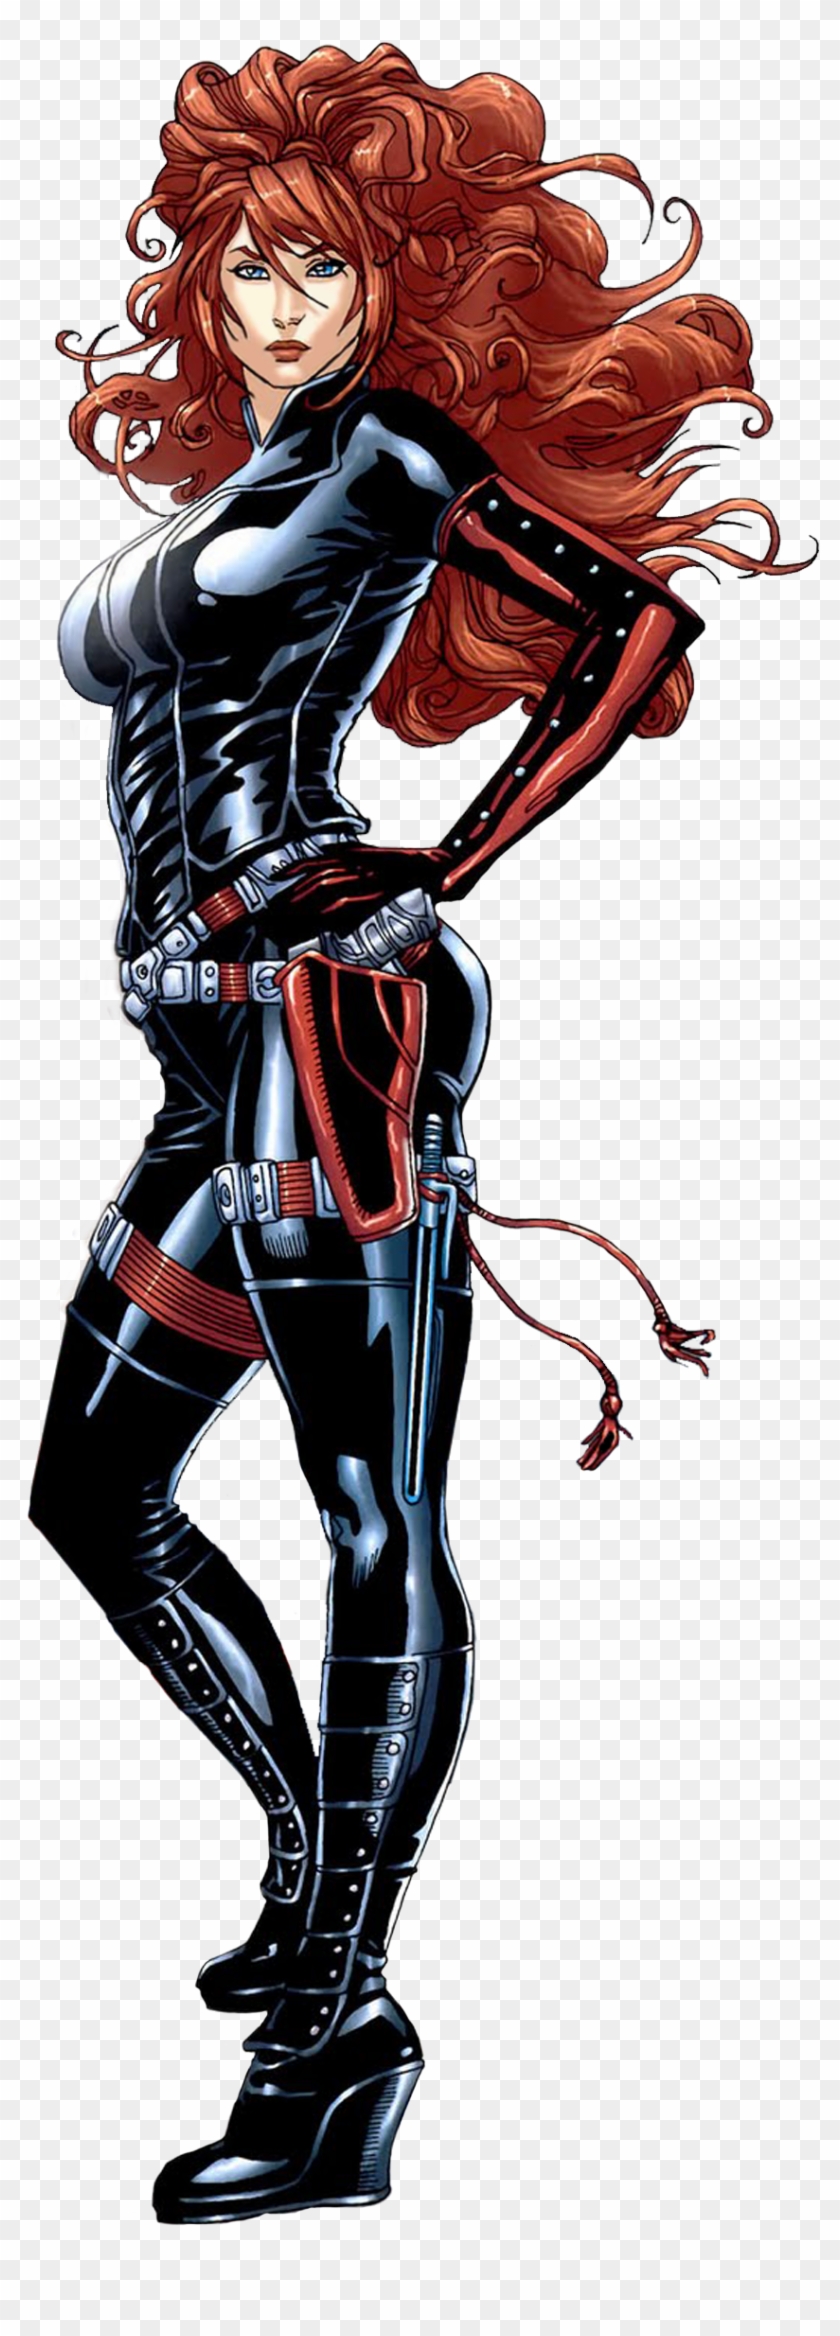 Black Widow From The Avengers - Comic Book Black Widow Transparent Clipart